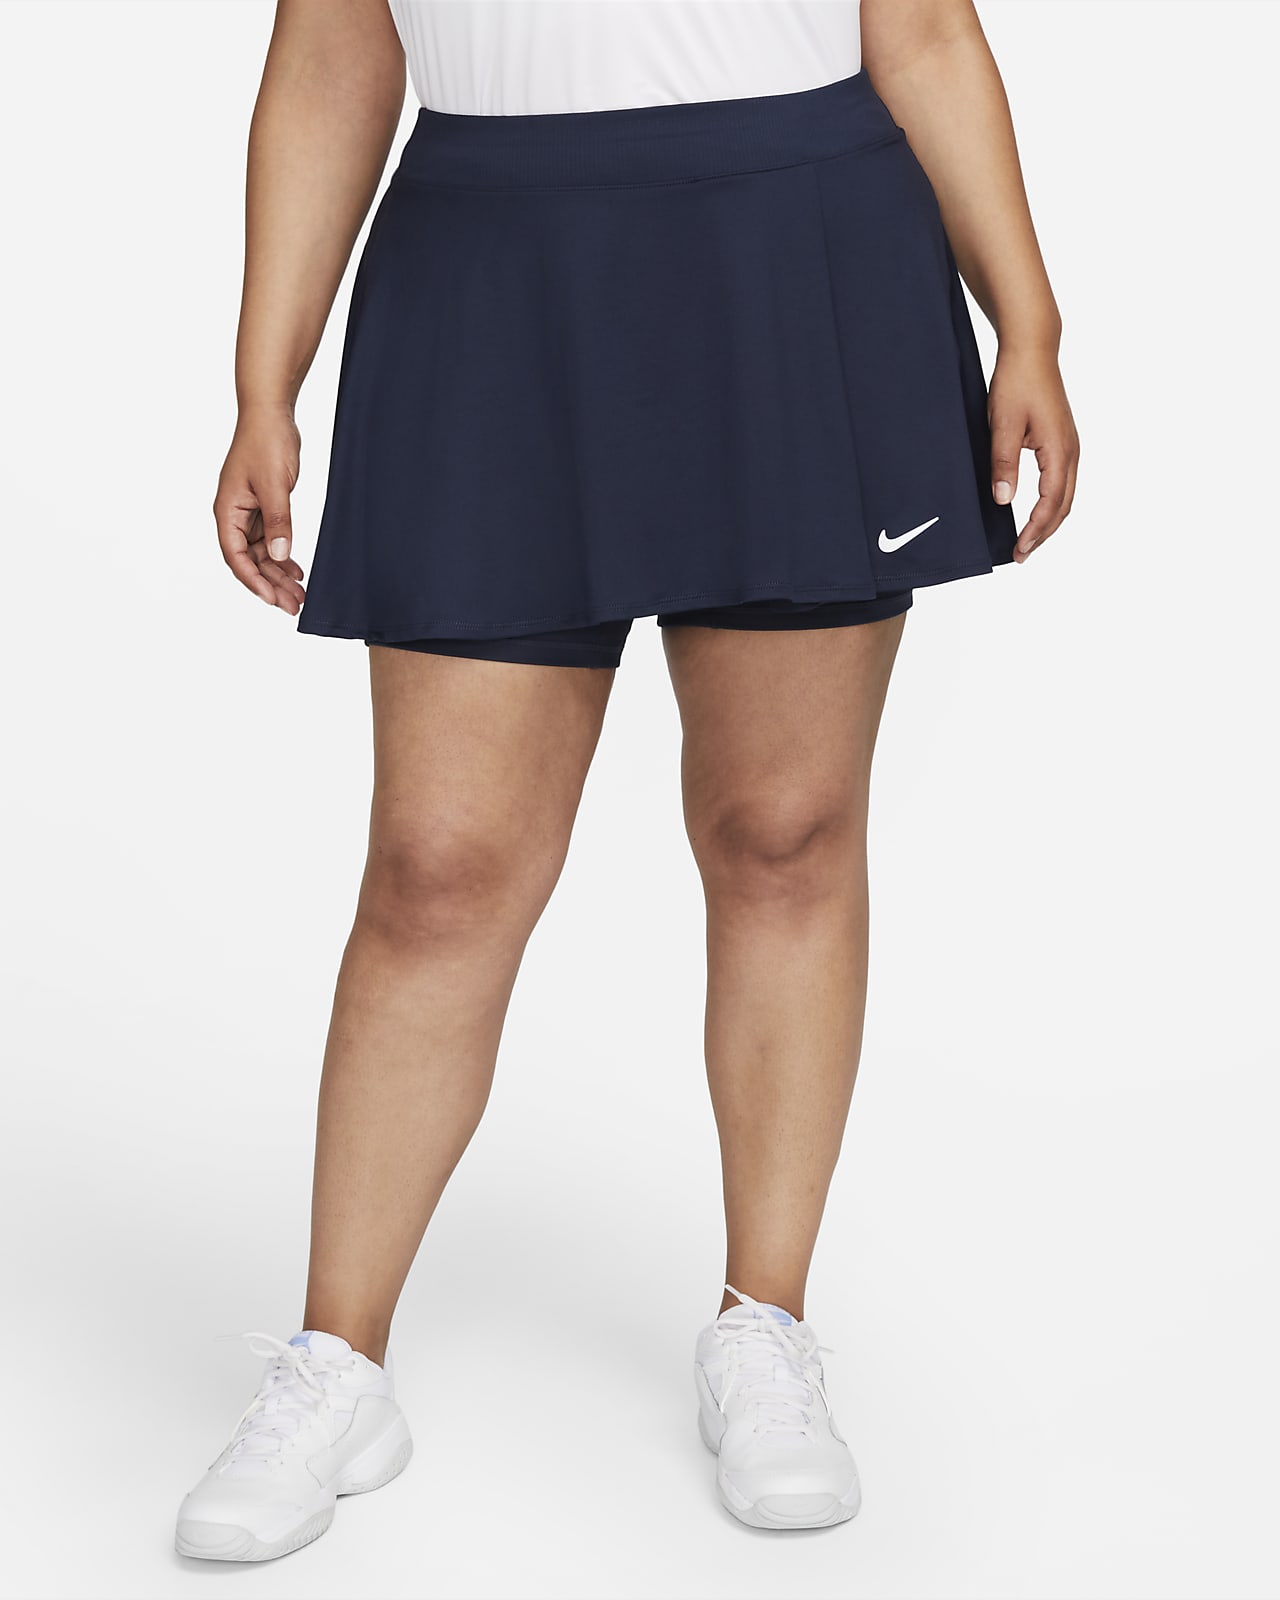 NikeCourt Victory Women's Tennis Skirt (Plus Size). Nike.com